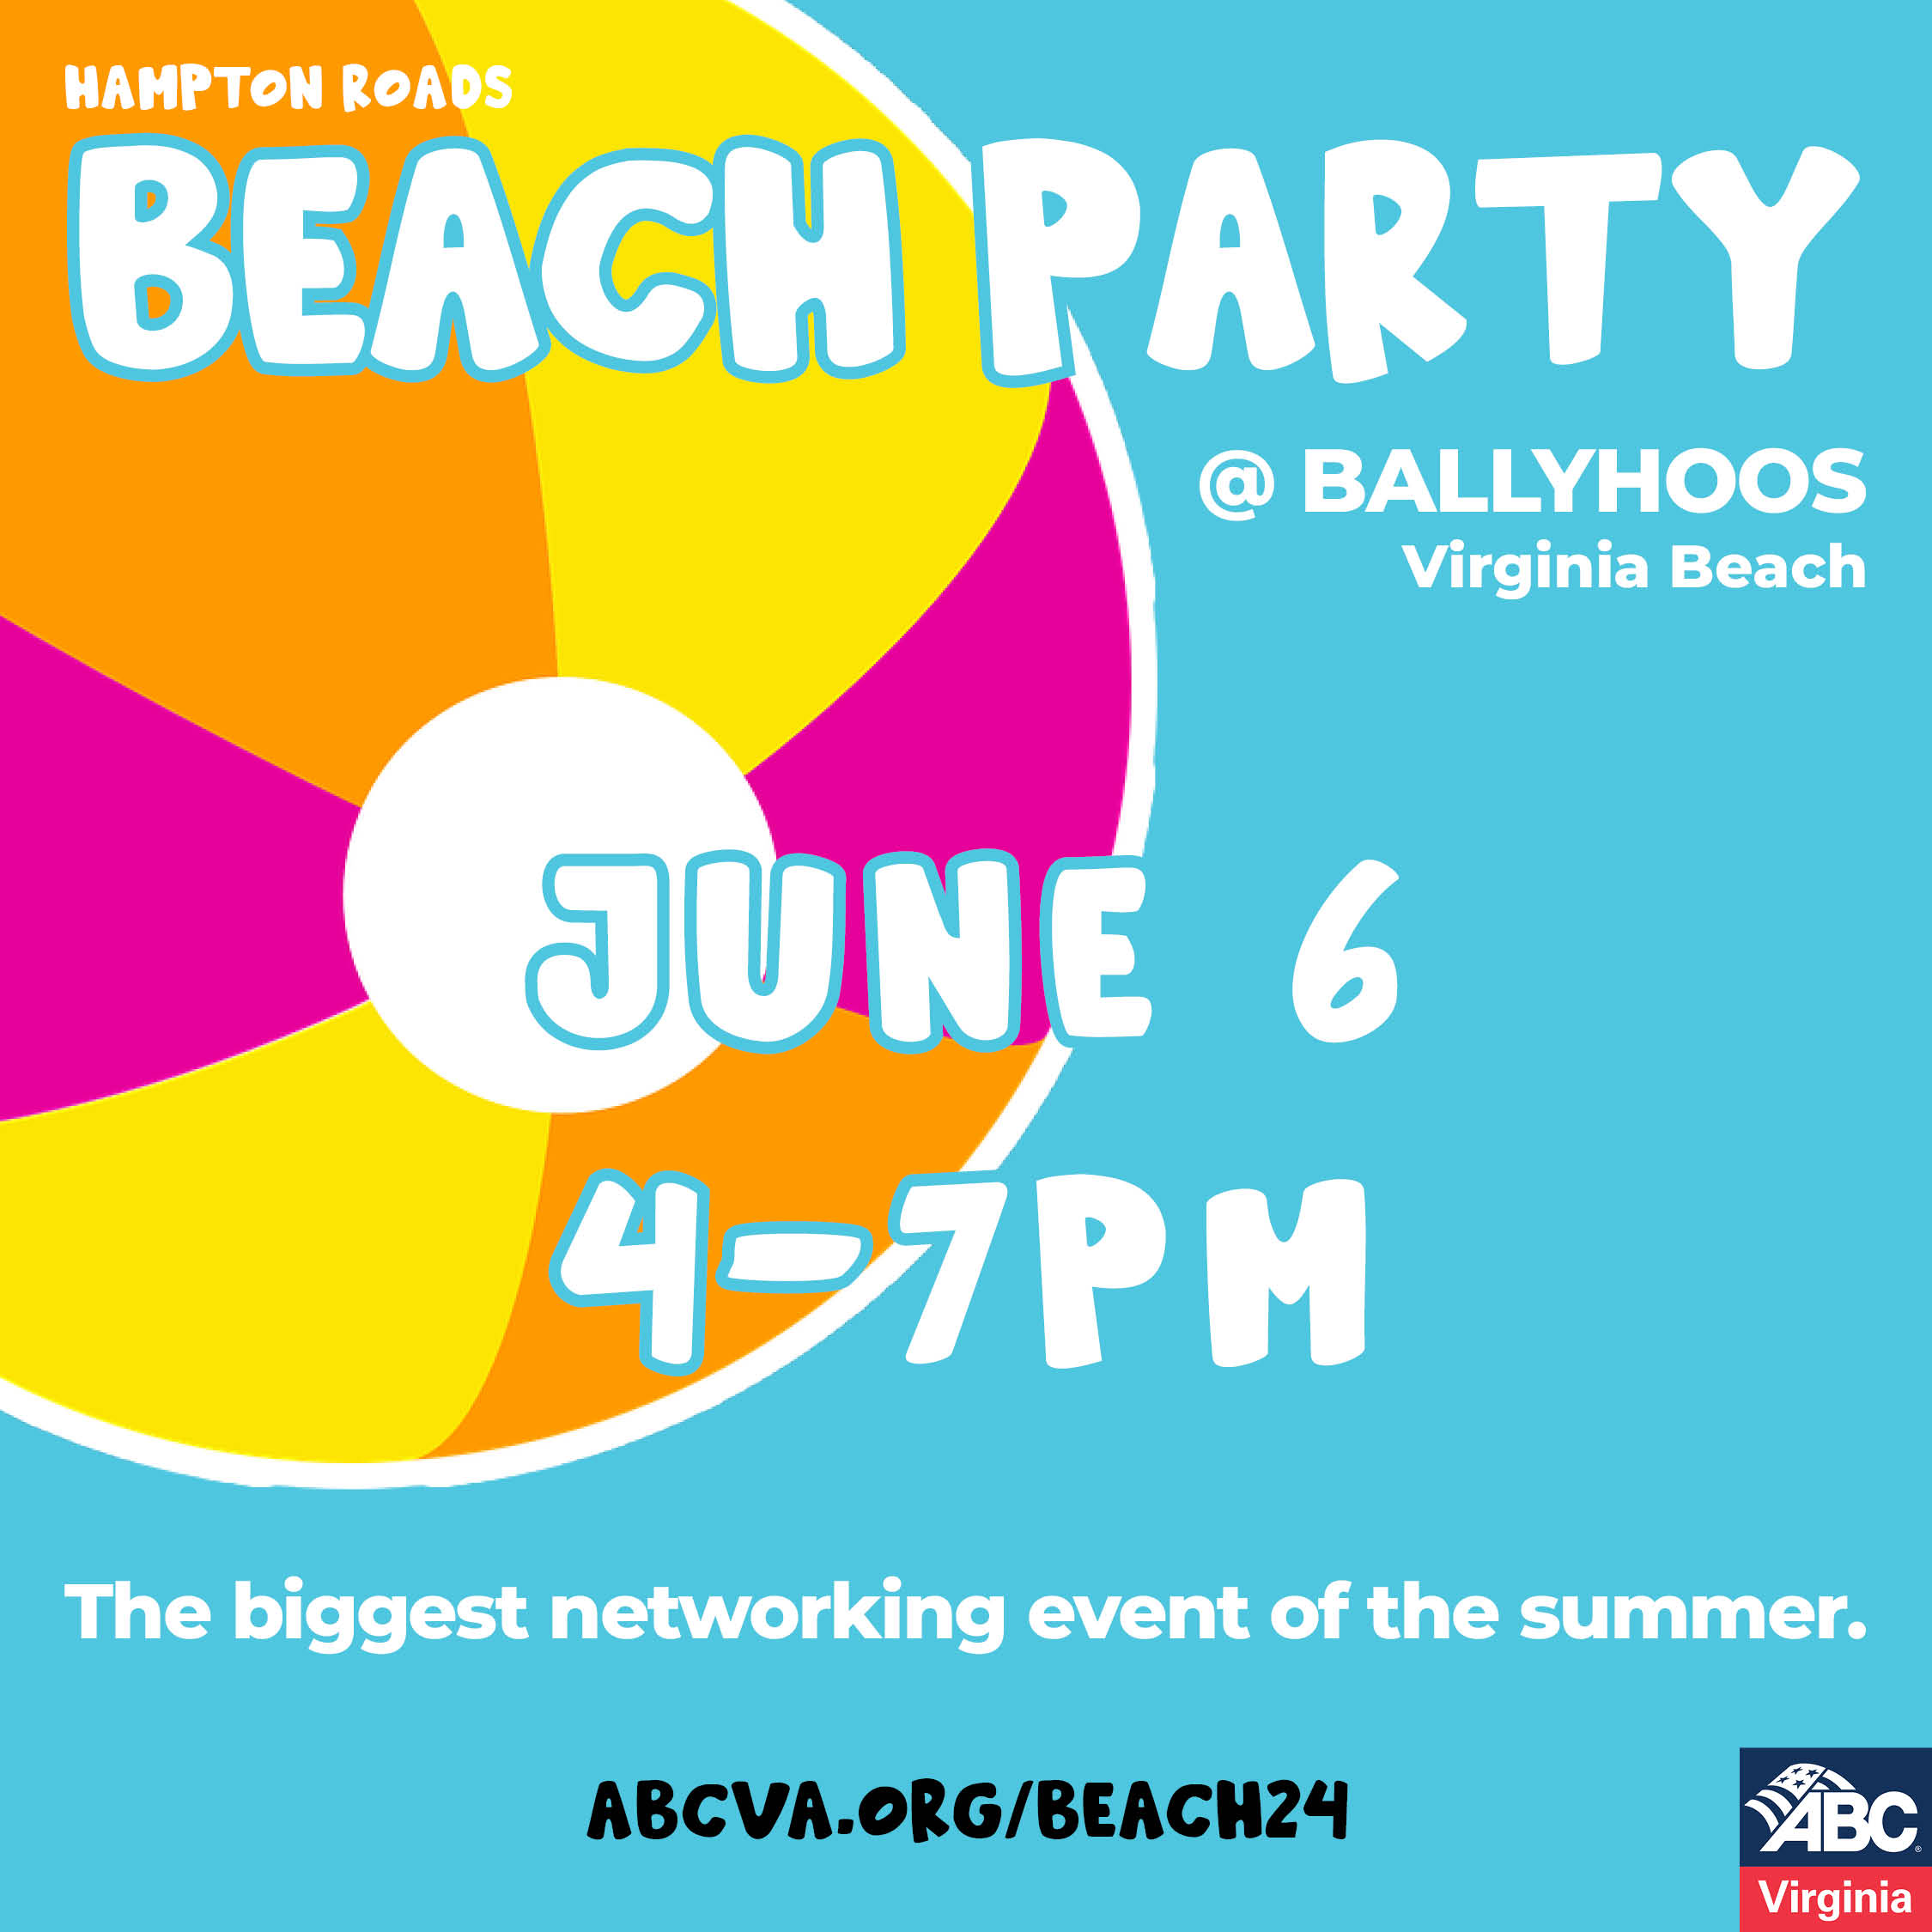 HR Ballyhoos Beach Party June 6 INSTA